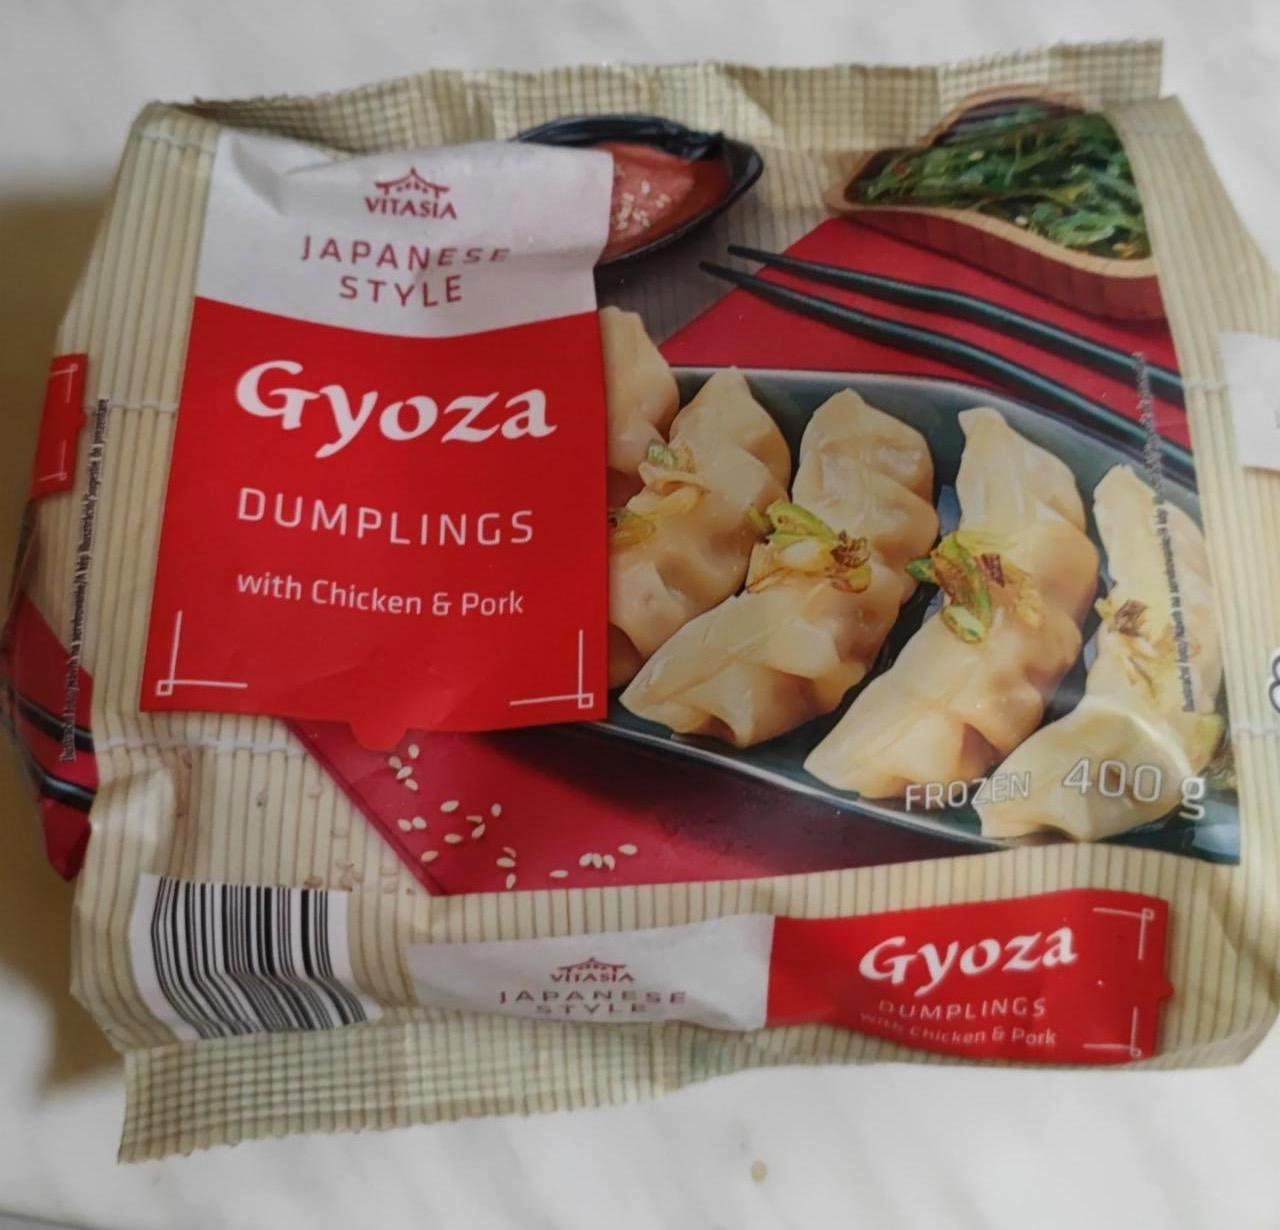 Fotografie - Japanese Style Gyoza Dumplings with chicken & pork Vitasia